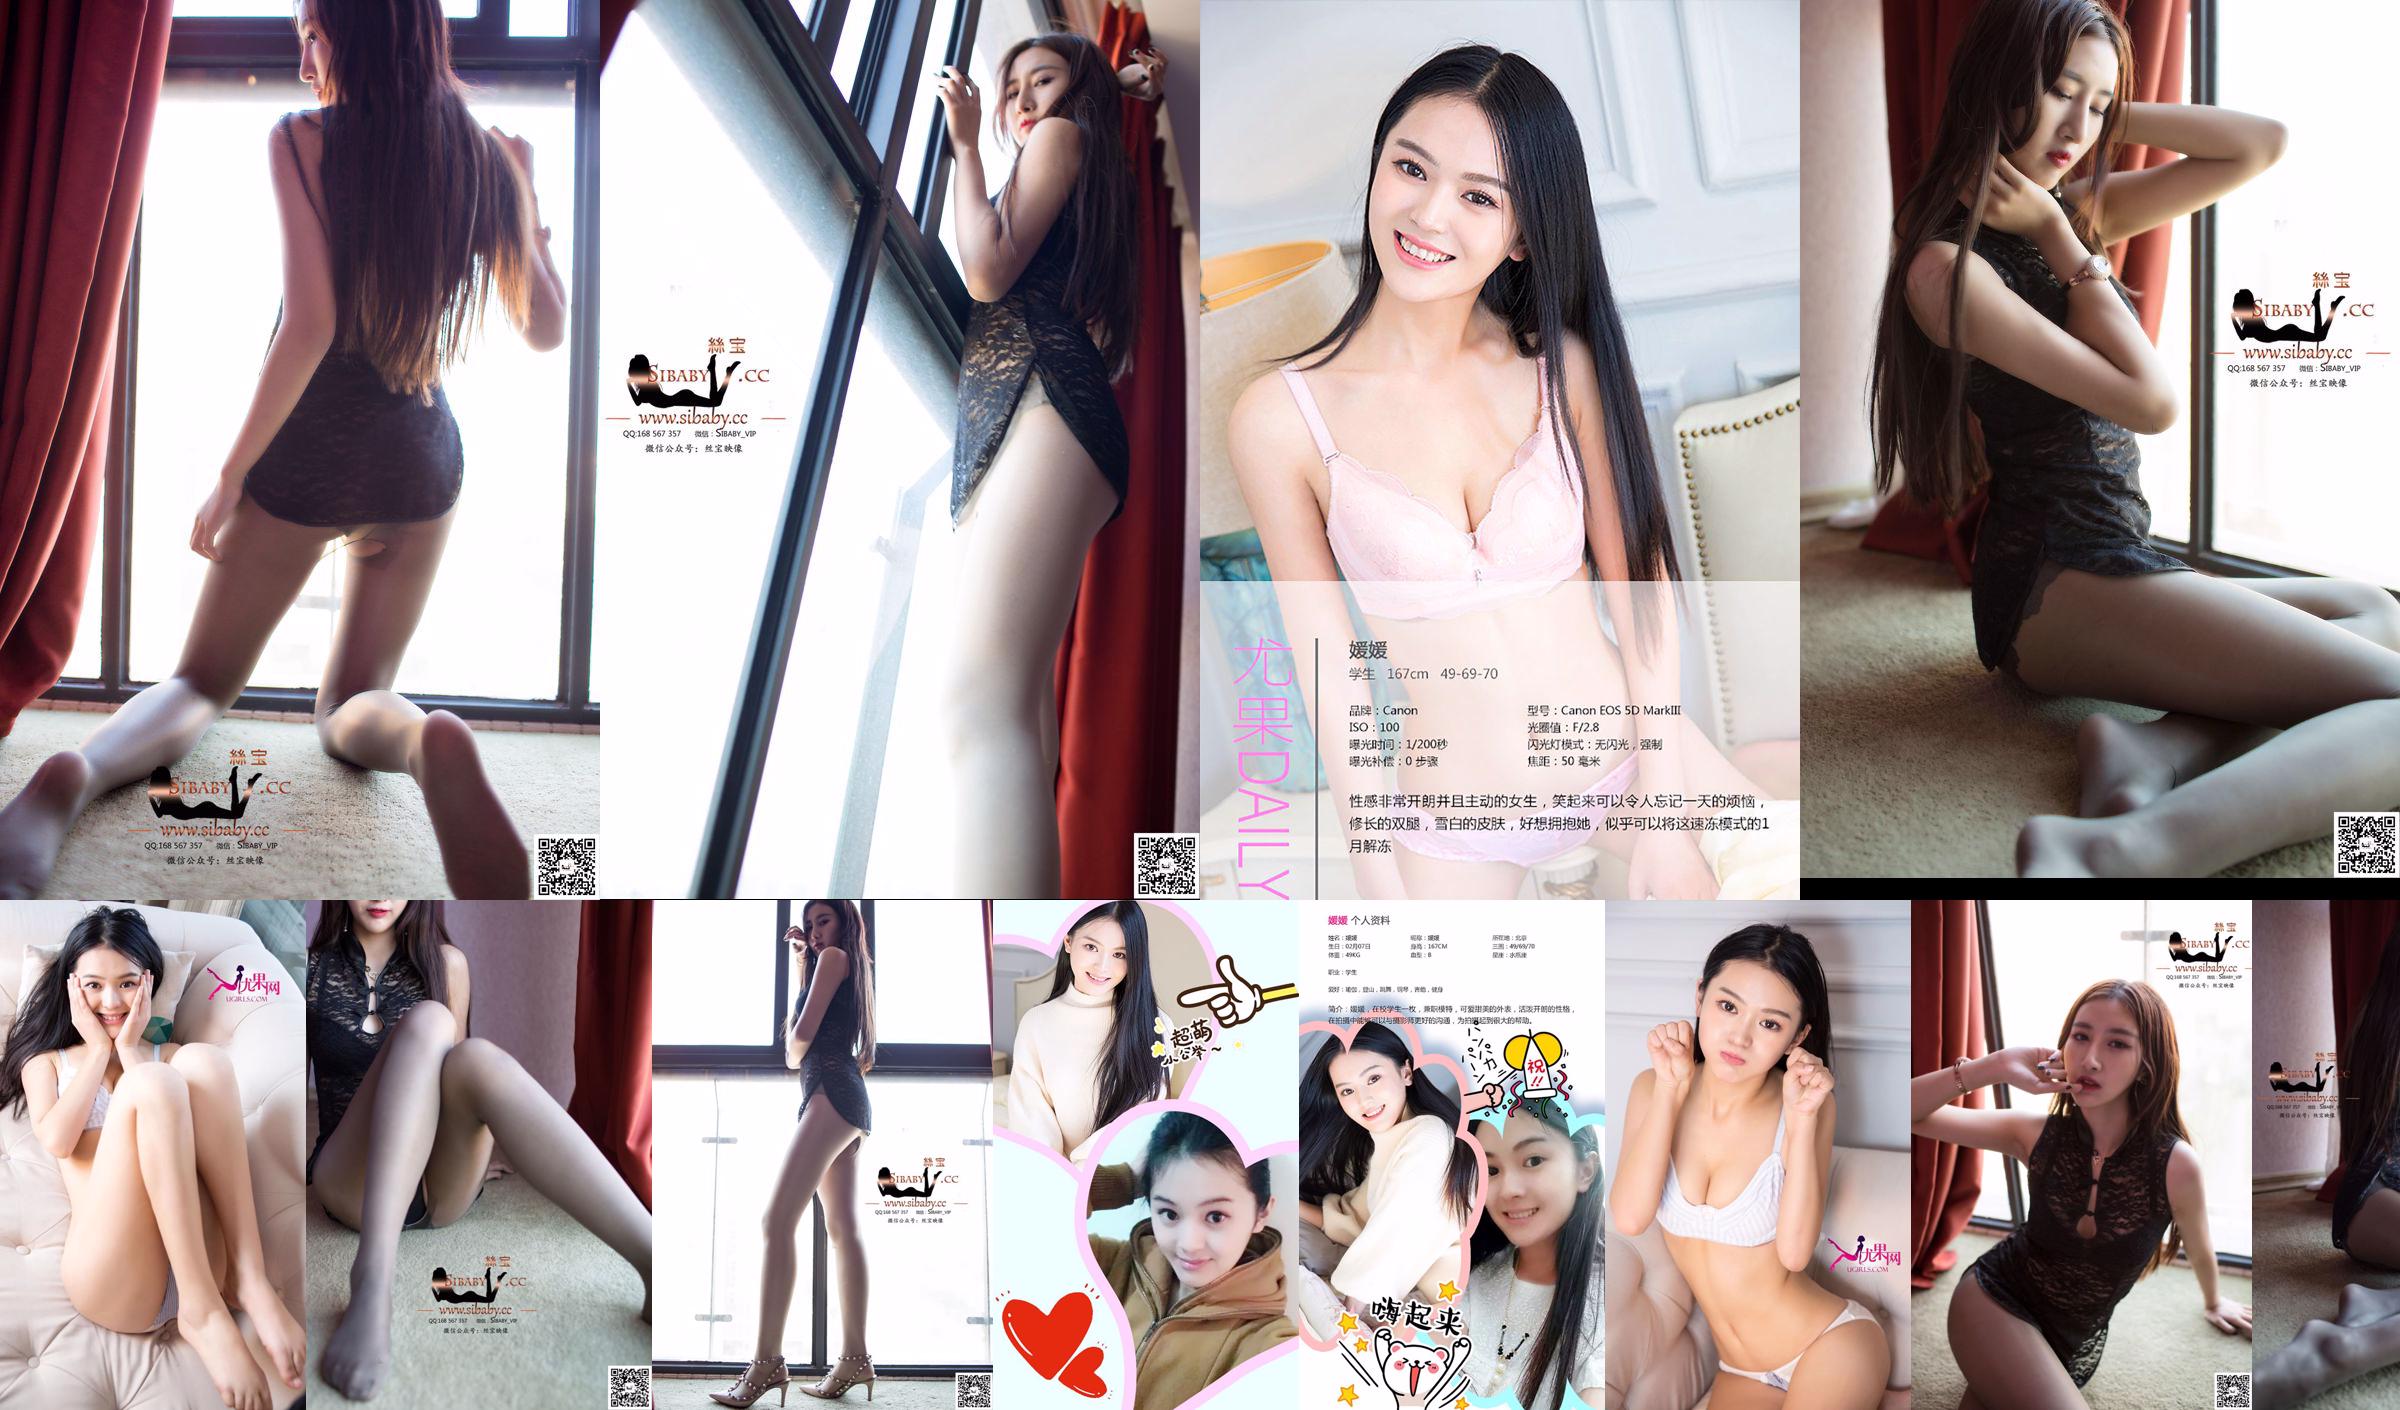 [Simu] SM270 Ein Yuan jeden Tag Yuanyuan "Private Shooting Freundinnen" No.3c13be Seite 1